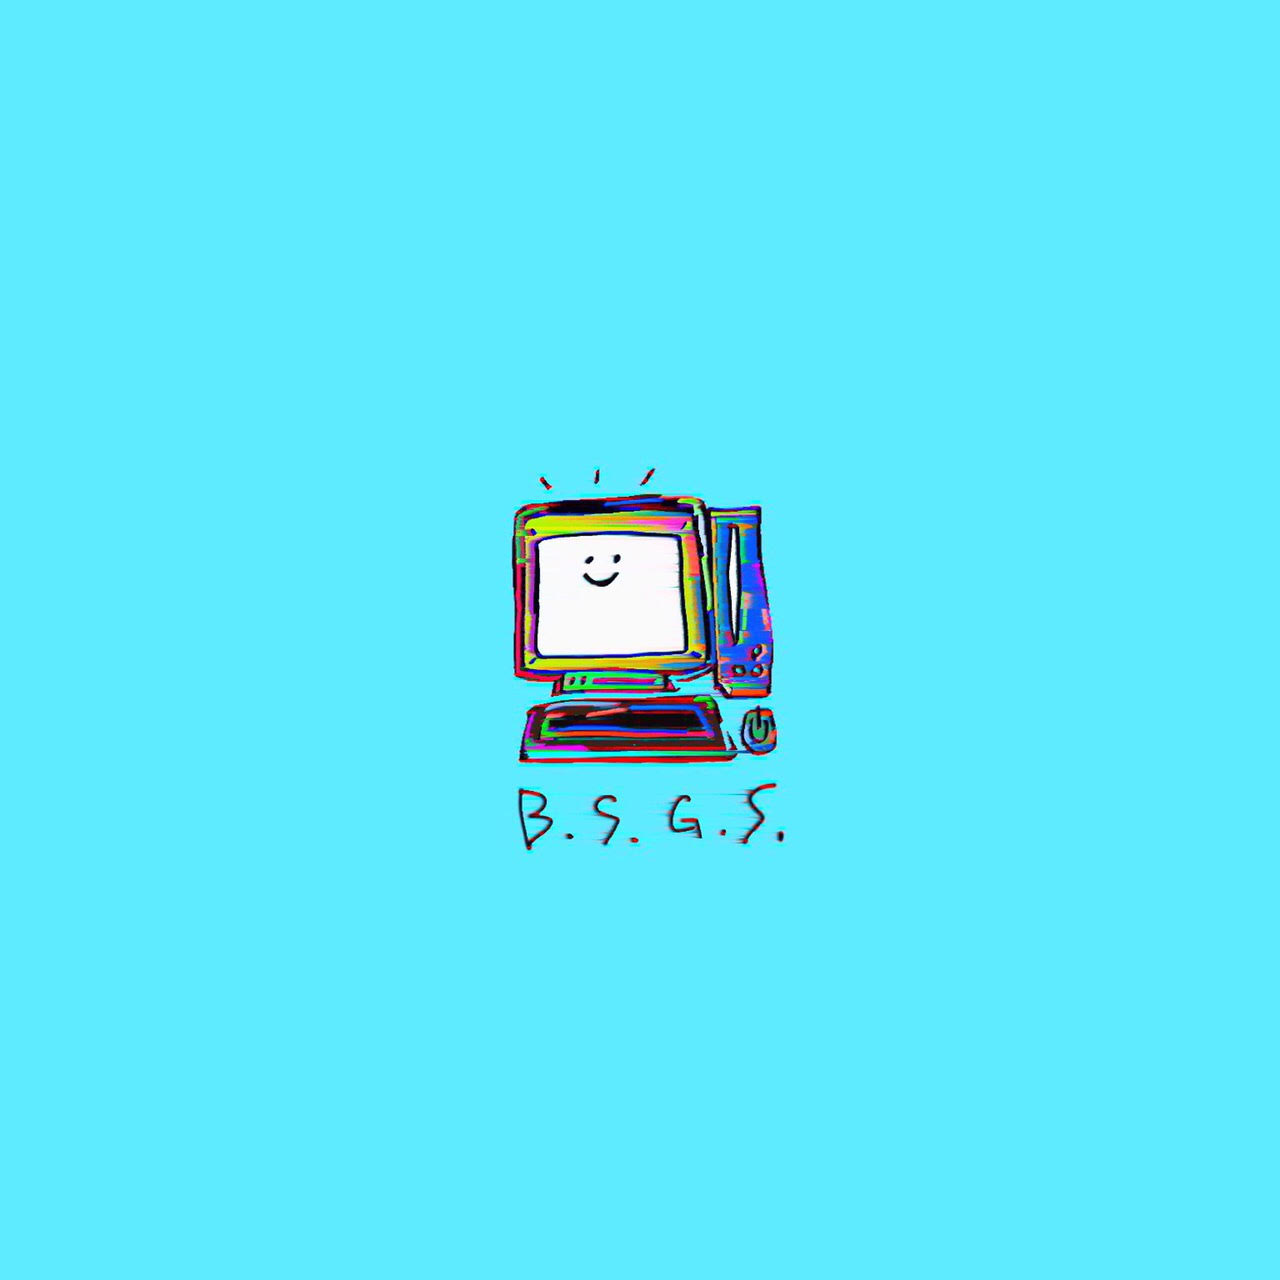 sooogood!  - Digital Single<br>“B.S.G.S.”